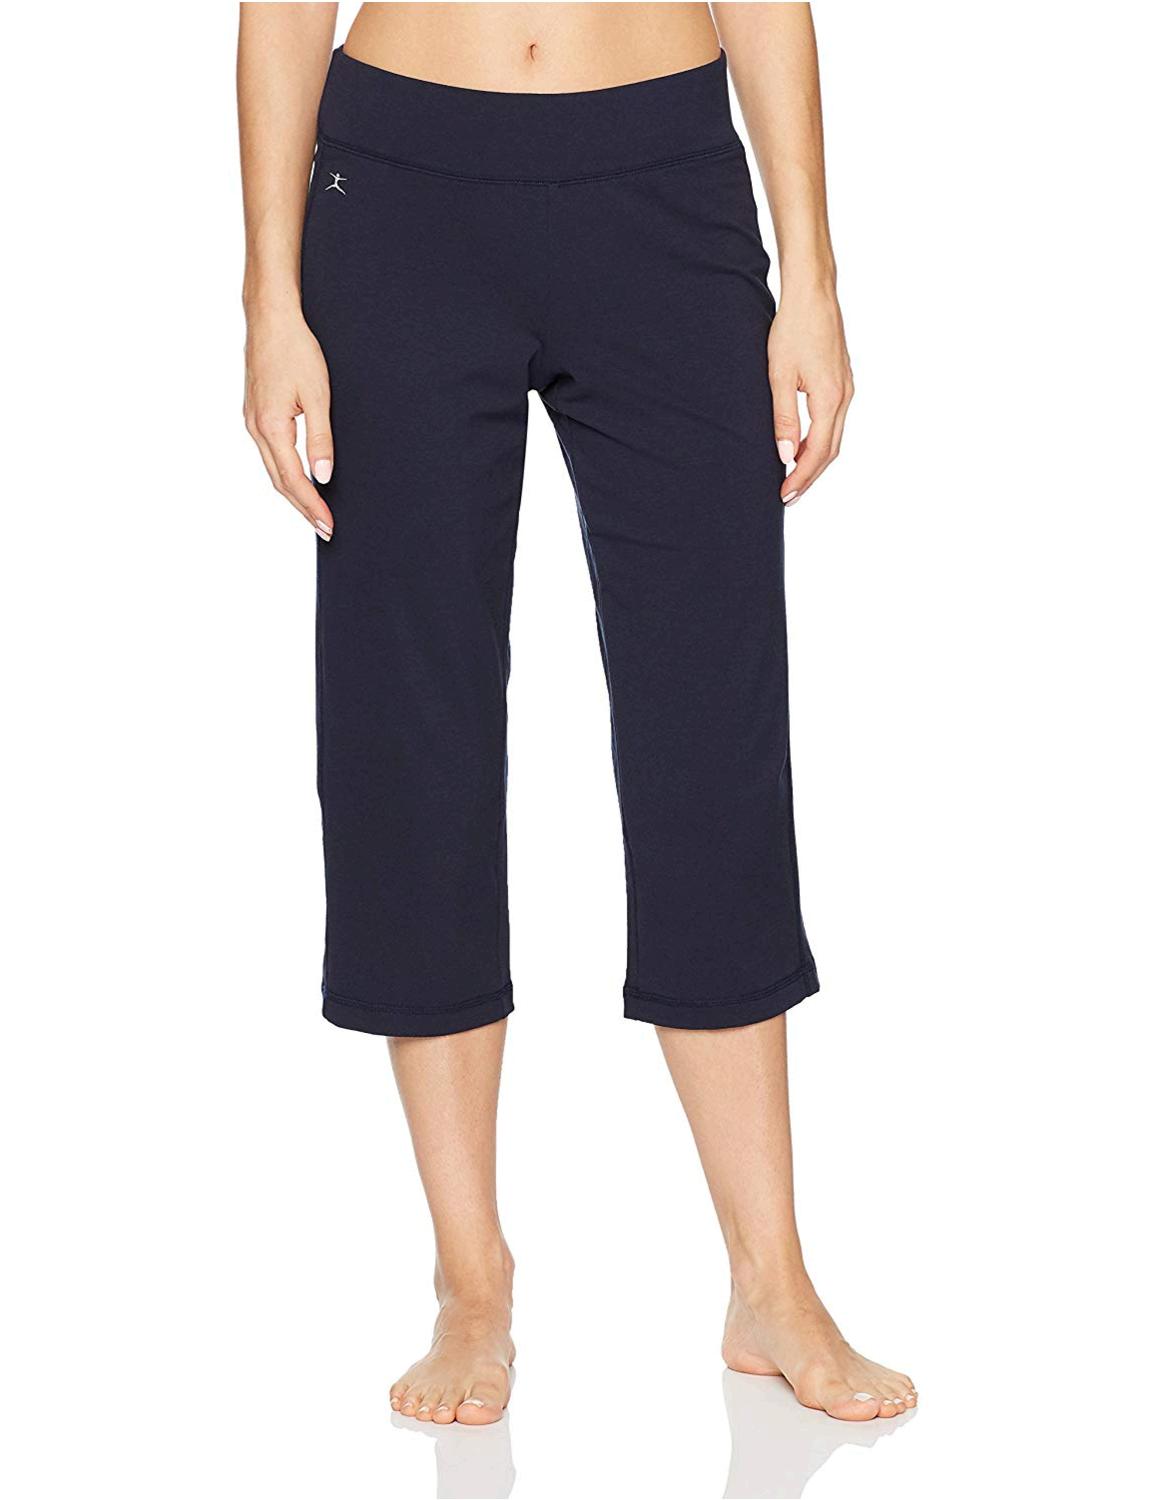 Danskin Women's Plus Size Sleek Fit Yoga Crop Pant,, Midnight Navy ...